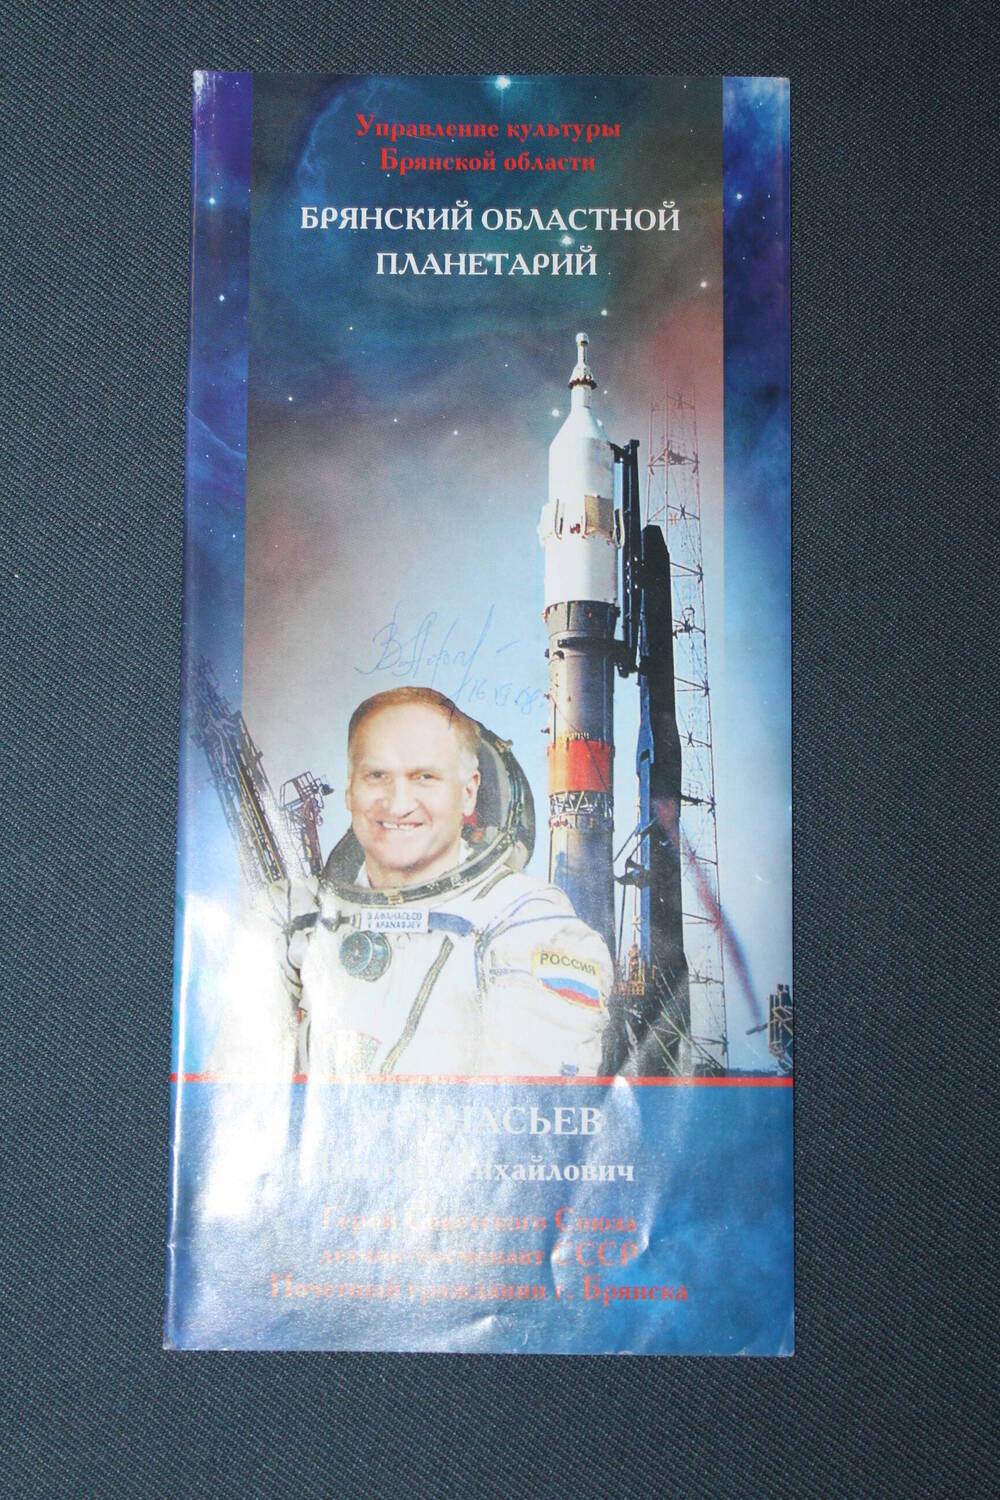 Буклет «Афанасьев Виктор Михайлович». Брянск, Брянский областной Планетарий, 2007 г.